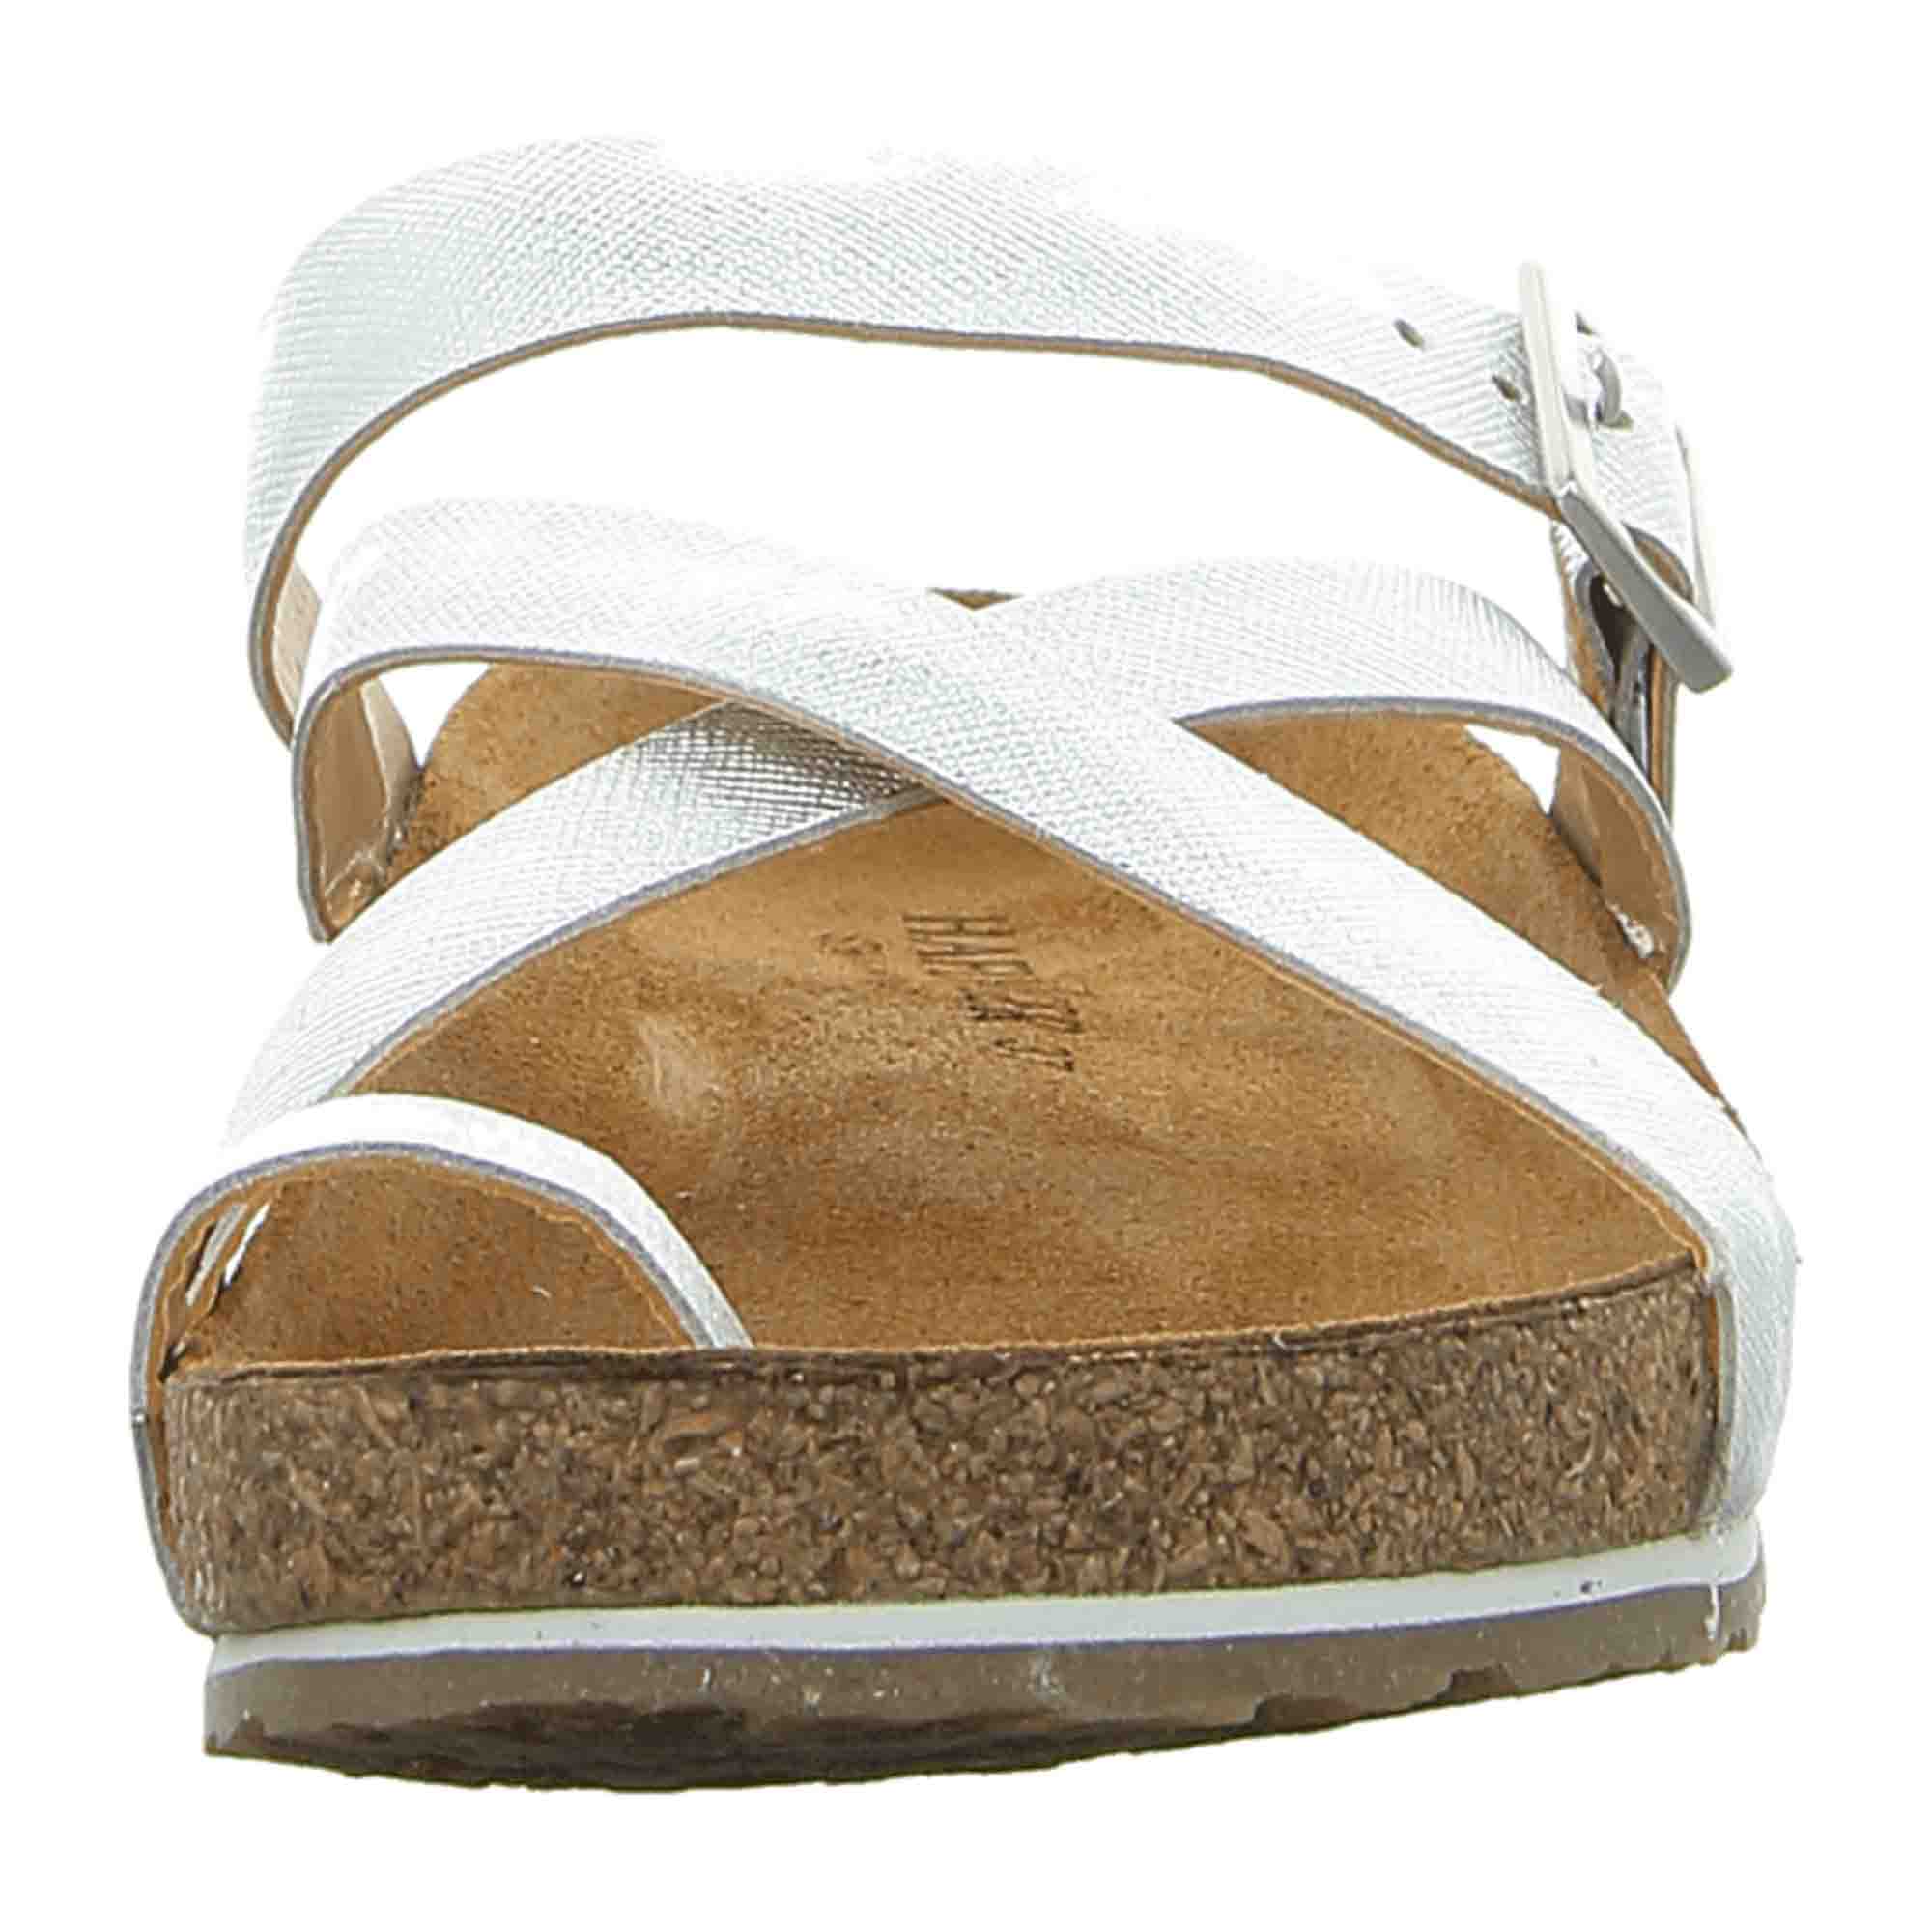 Haflinger Bio Luna Women's Silver Sandals - Stylish & Eco-Friendly